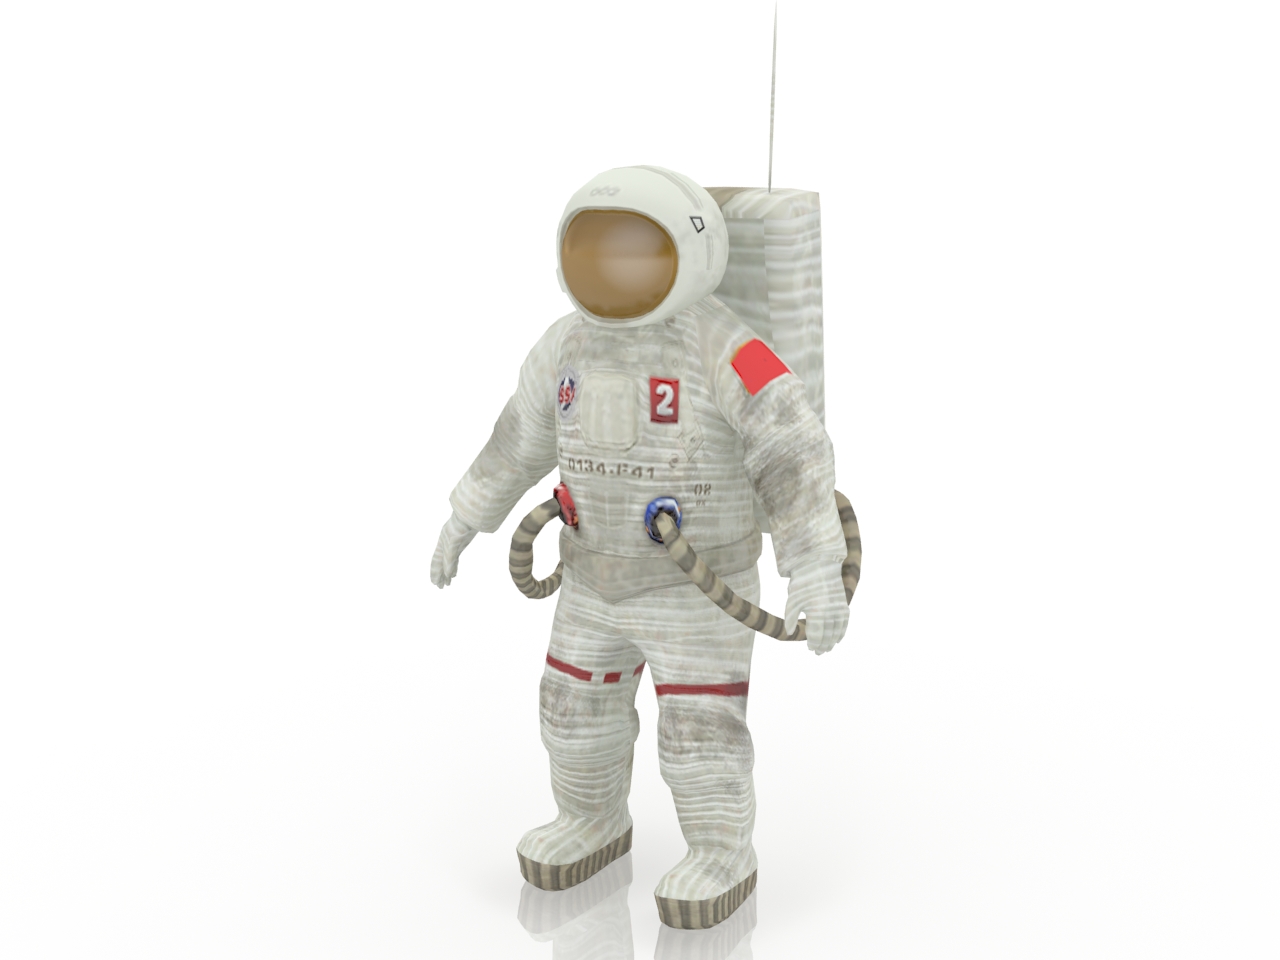 Гига скафандр мод 4. Фигурка "космонавт". Скафандр Космонавта. Игрушка космонавт. Детский скафандр игрушка.